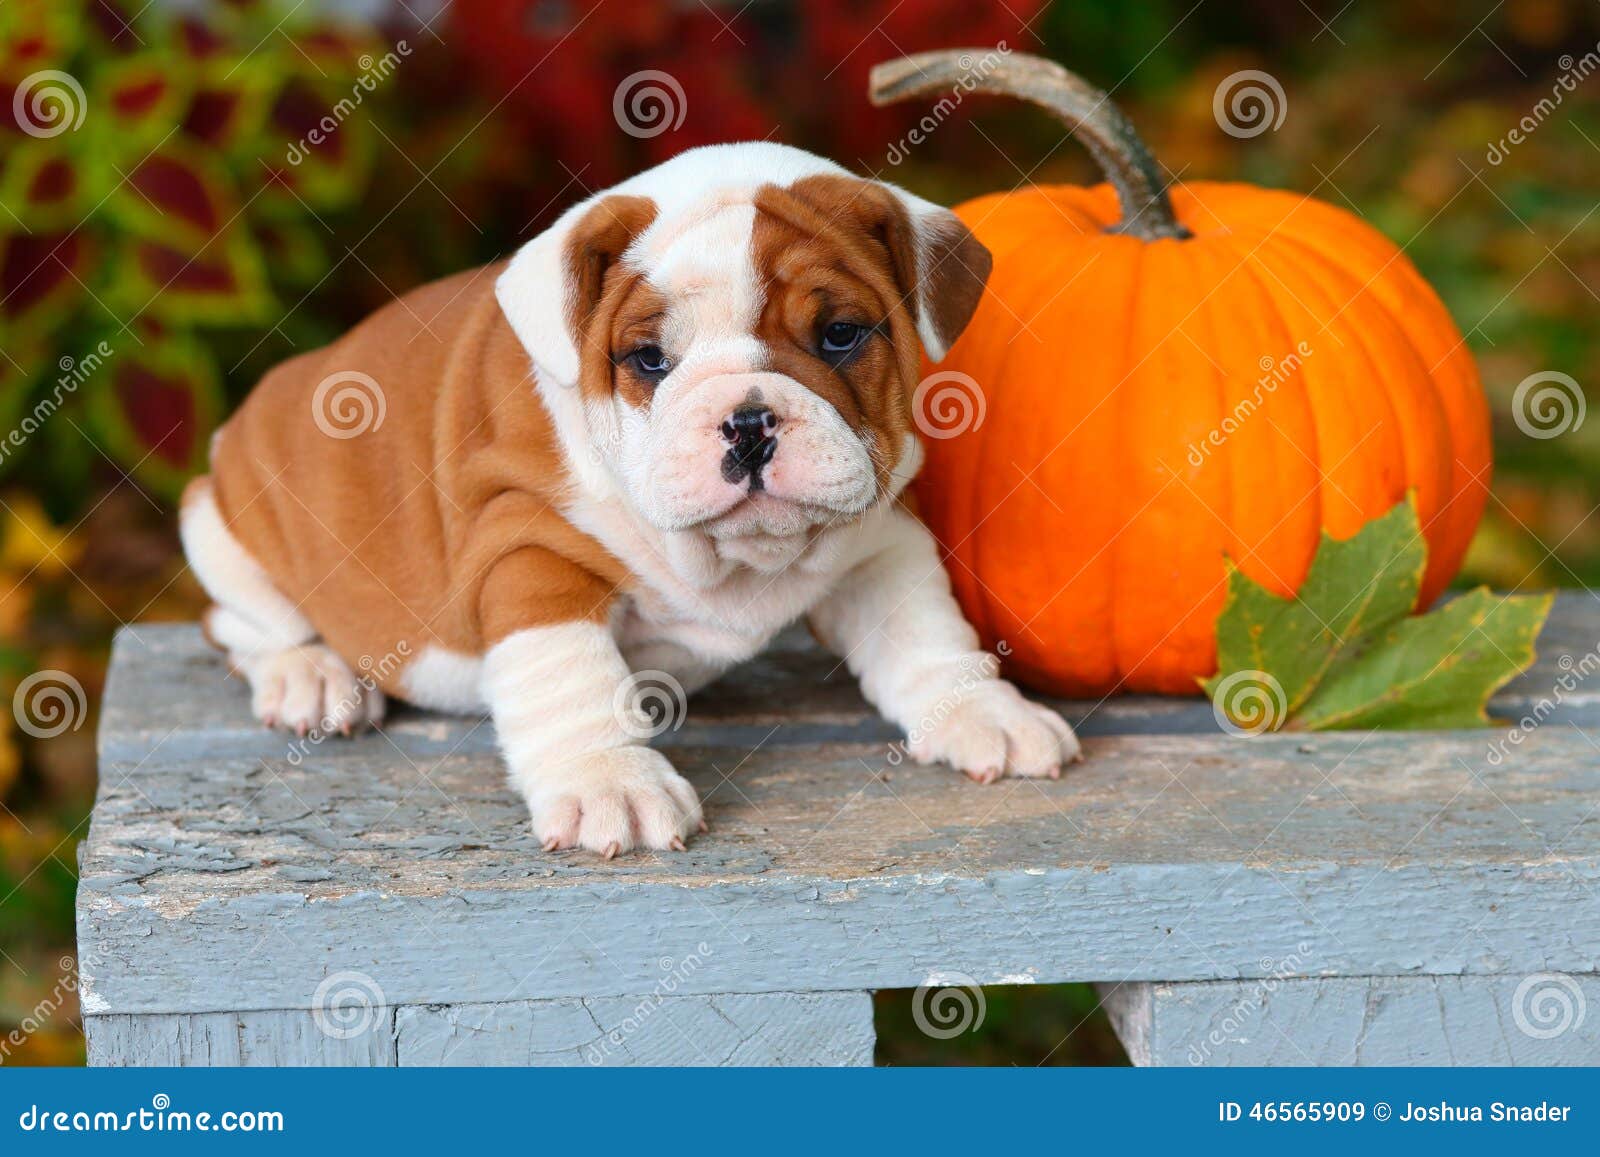 English Bulldog Puppy Sitting On Garden Bench With Pumpkin ...